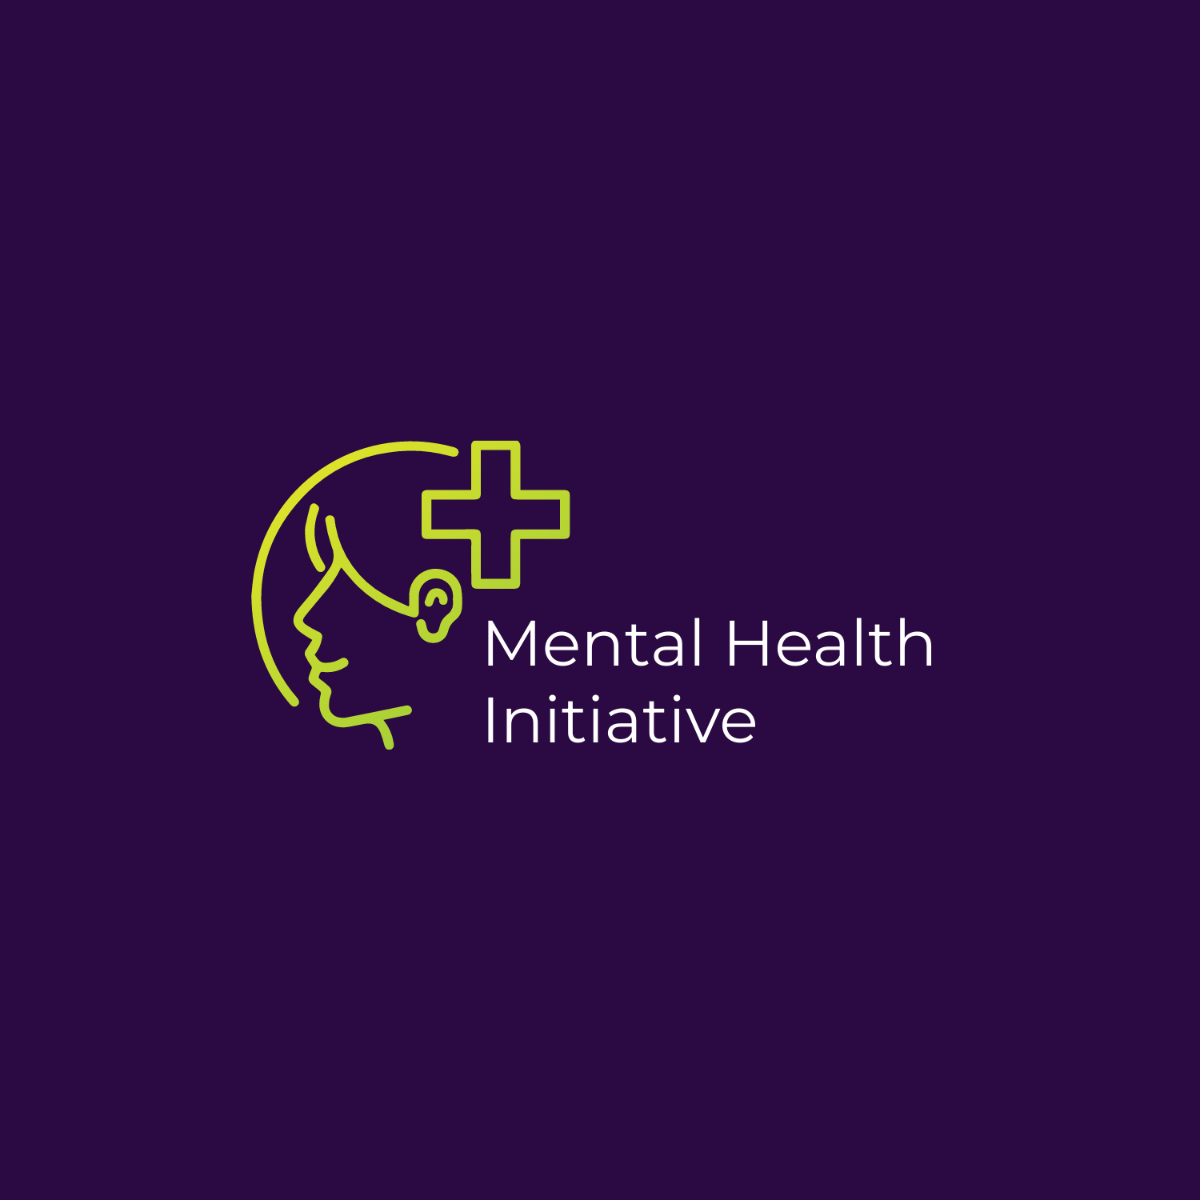 Mental Health Initiative Logo Template